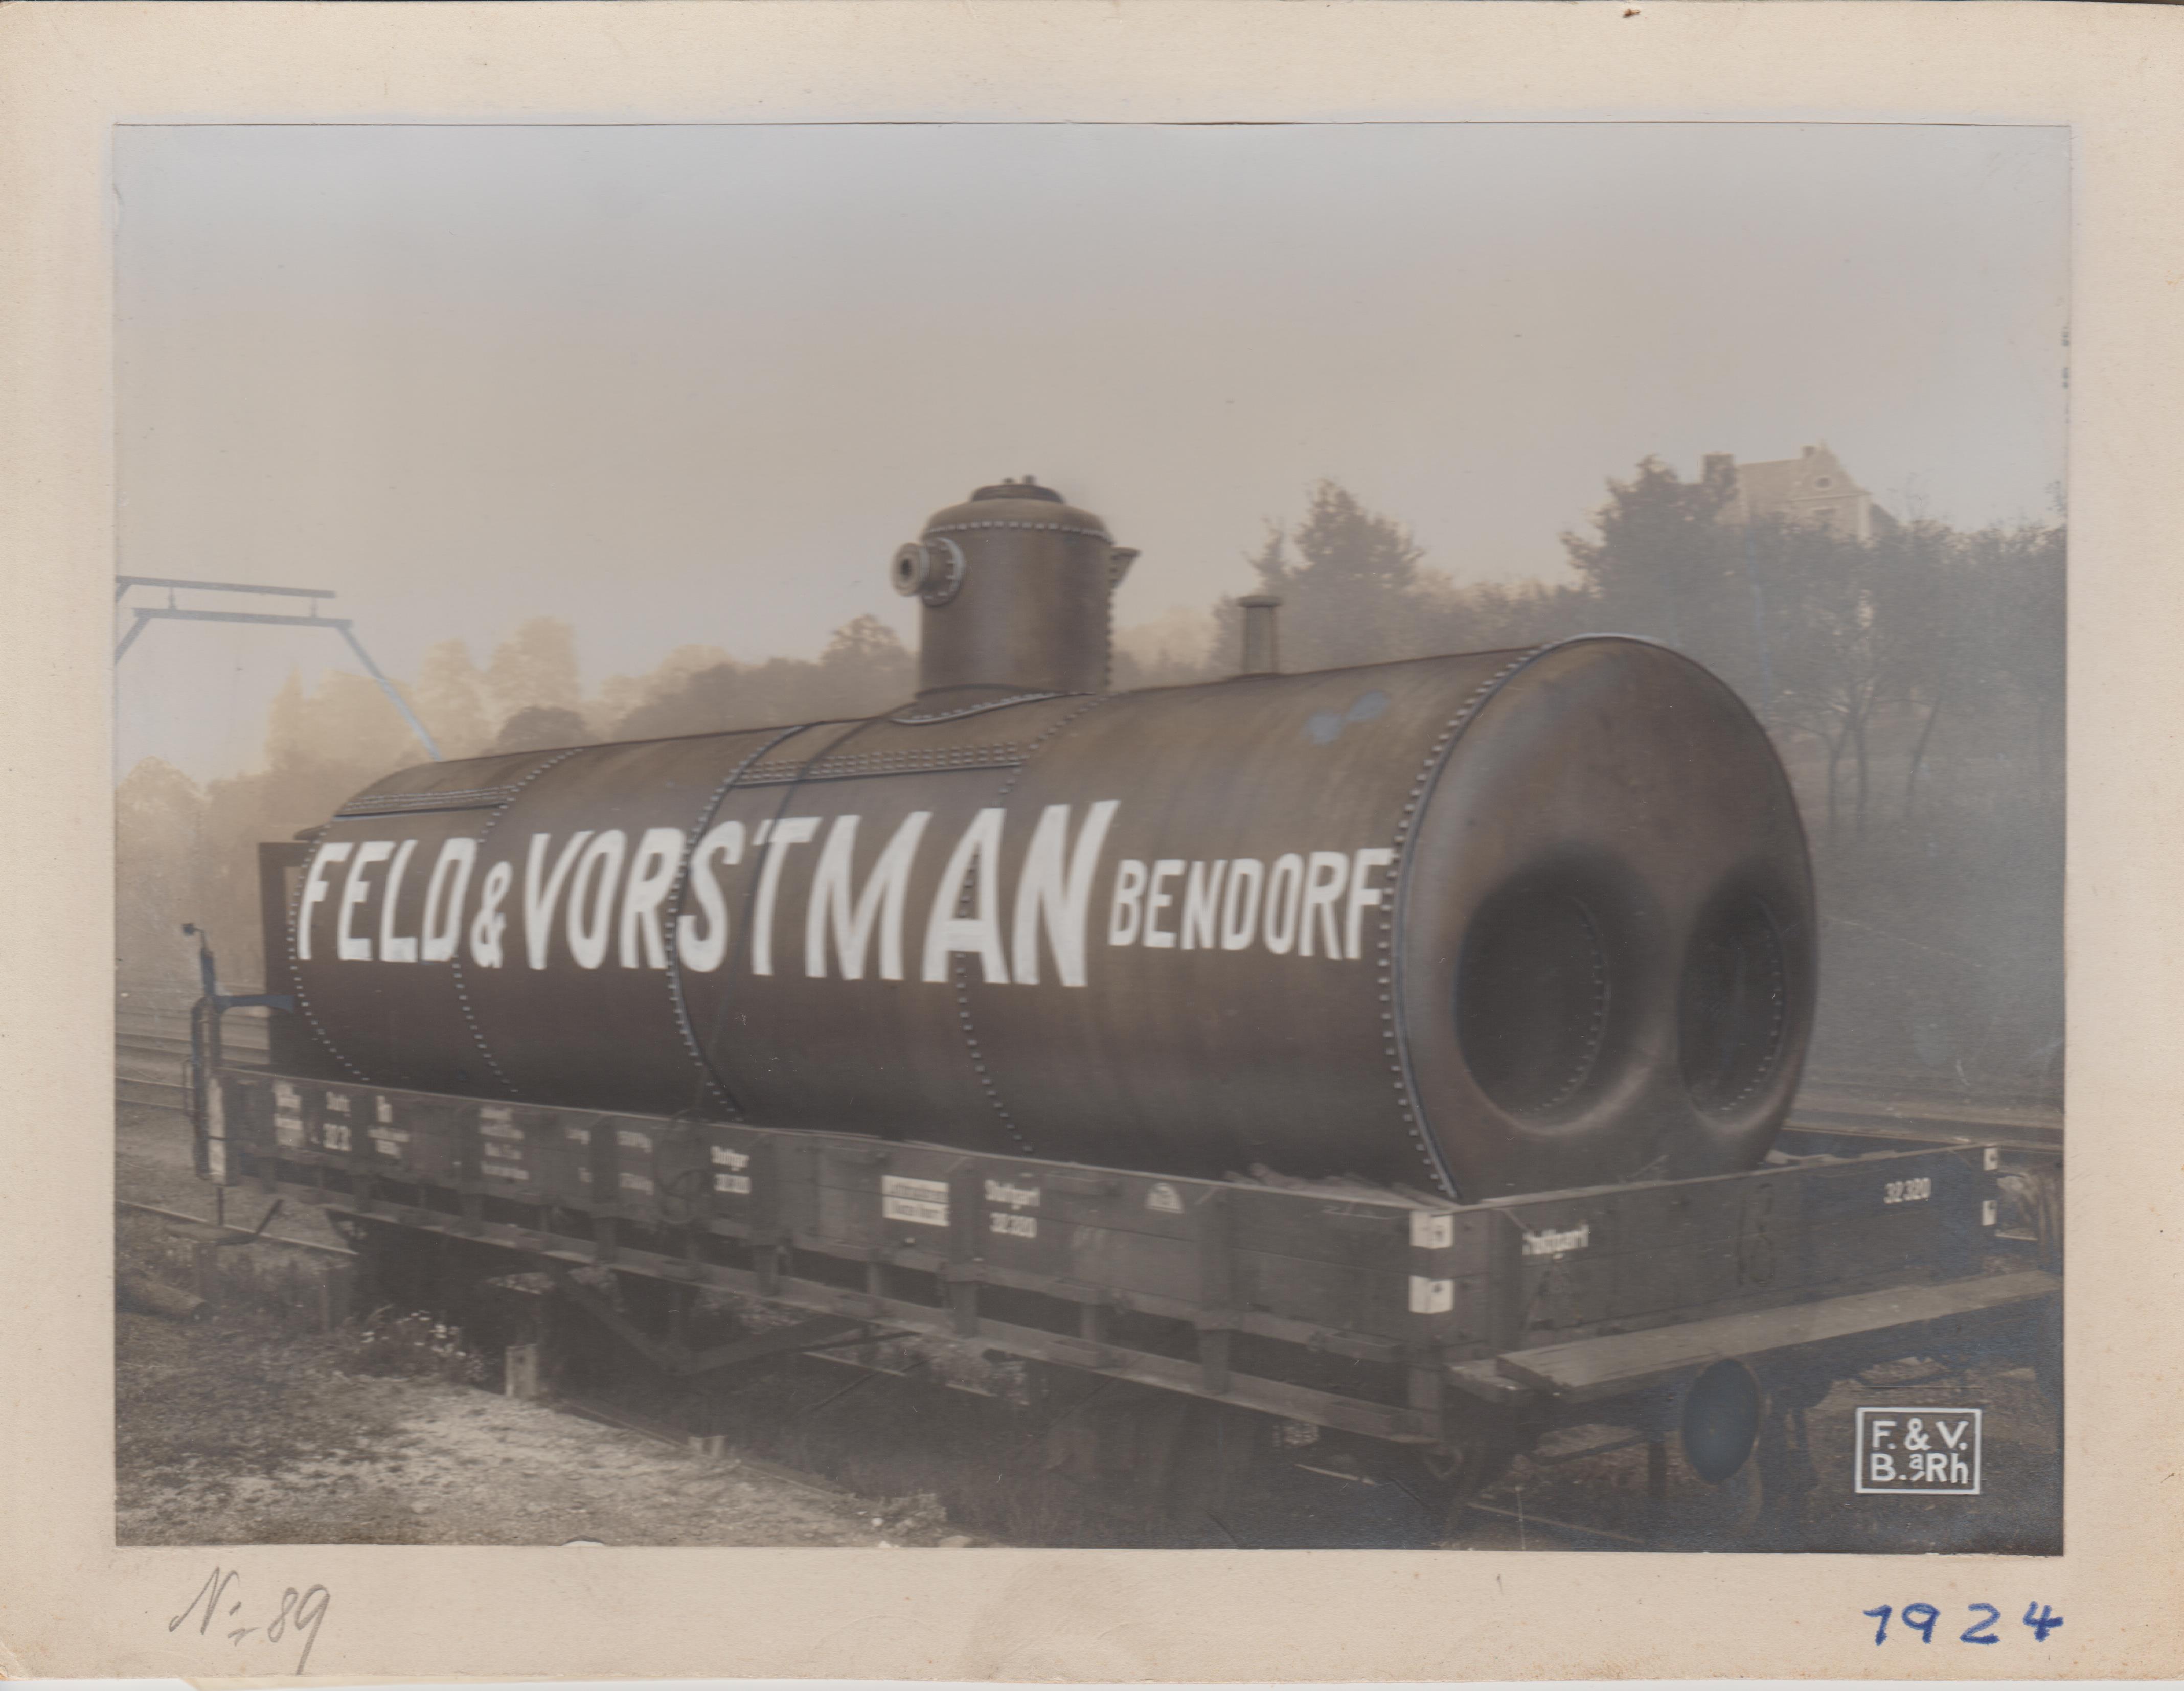 Produkte der Firma "Feld & Hahn" Bendorf, 1924 (REM CC BY-NC-SA)